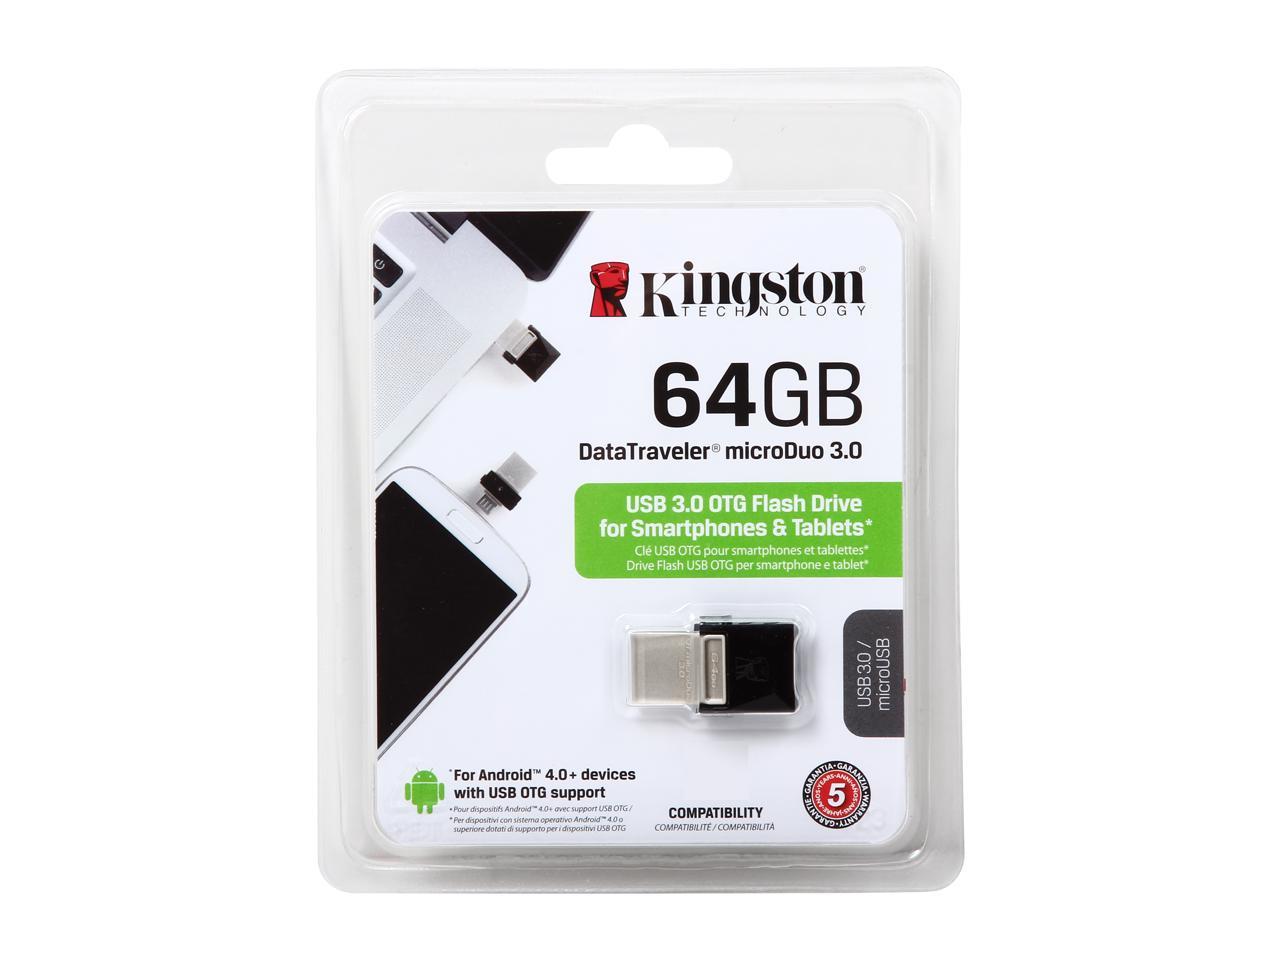 Kingston 64GB Data Traveler Micro Duo OTG USB 3.0 Flash Drive (DTDUO3/64GB)